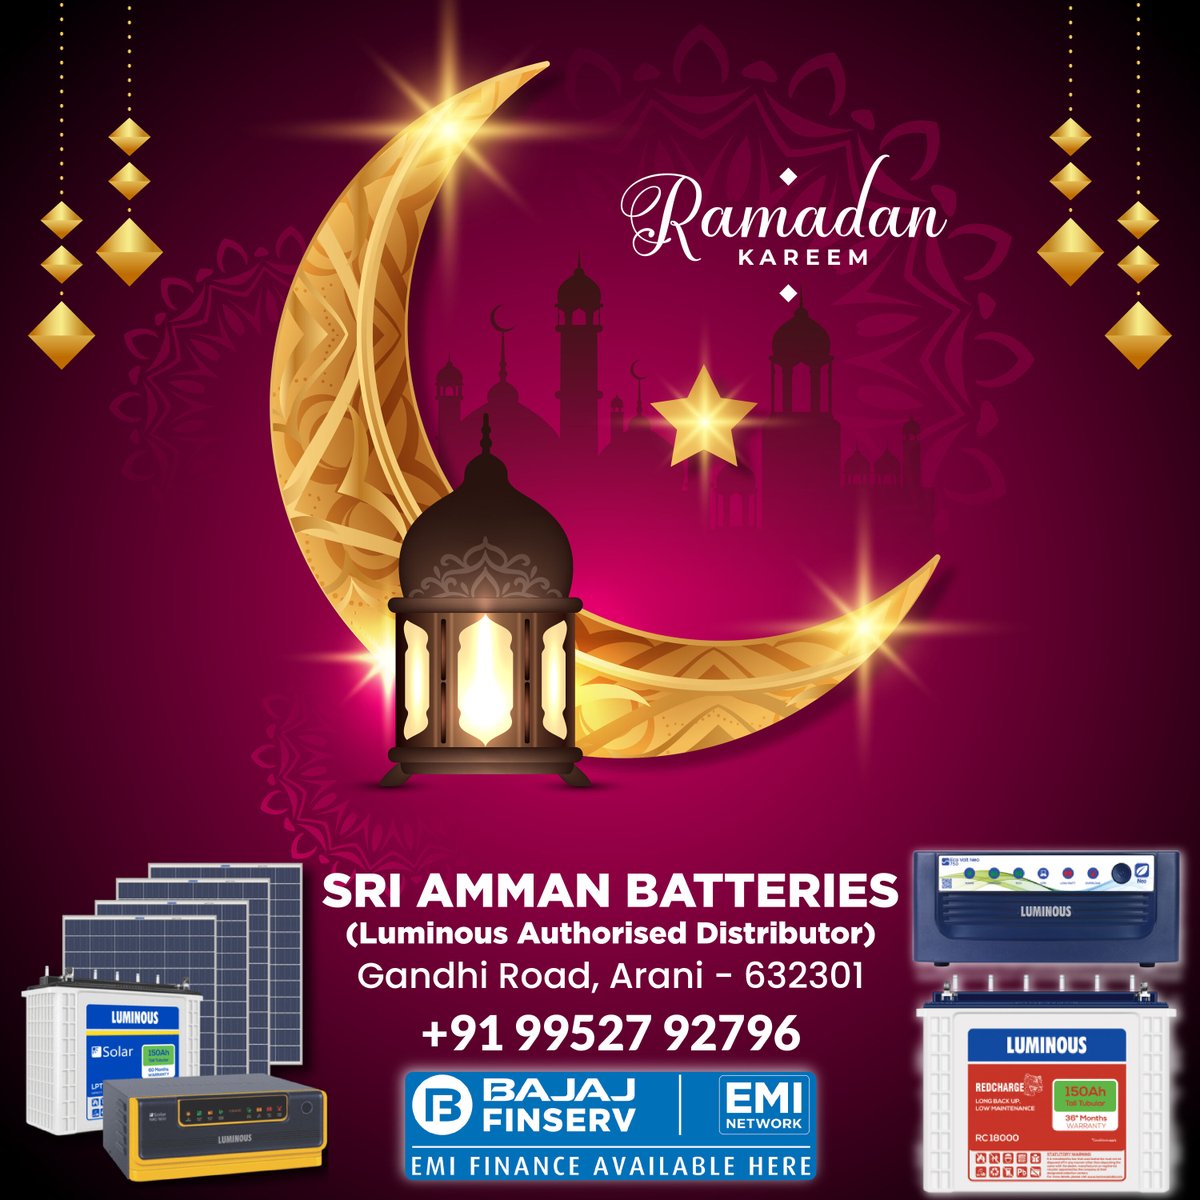 Ramadan Mubarak 2023!
#happyramadan #Battery #battery #batteryreplacement #batterypower #inverterbattery #invertersystem #solarinverter #inverterbatteries #inverter #solarsystem #solarpanels #solarpower #SolarPower #solar #solarinstallation